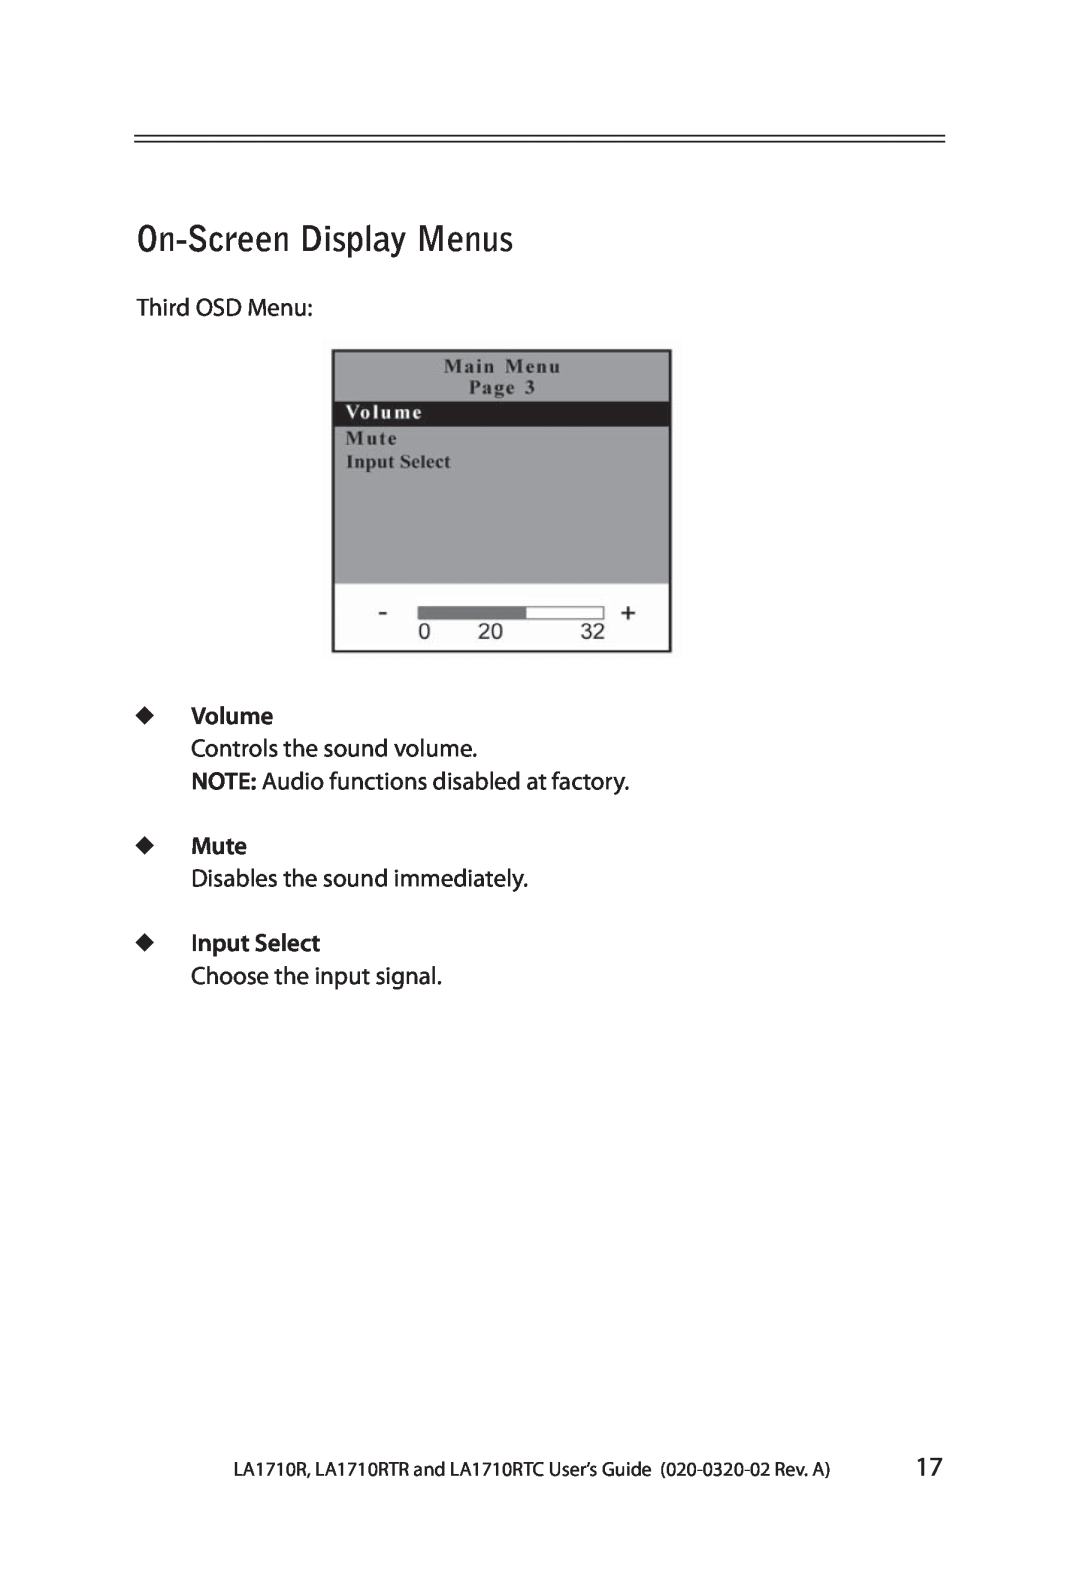 Planar LA1710RTC, LA1710RTR manual Volume, Mute, Input Select, On-Screen Display Menus 